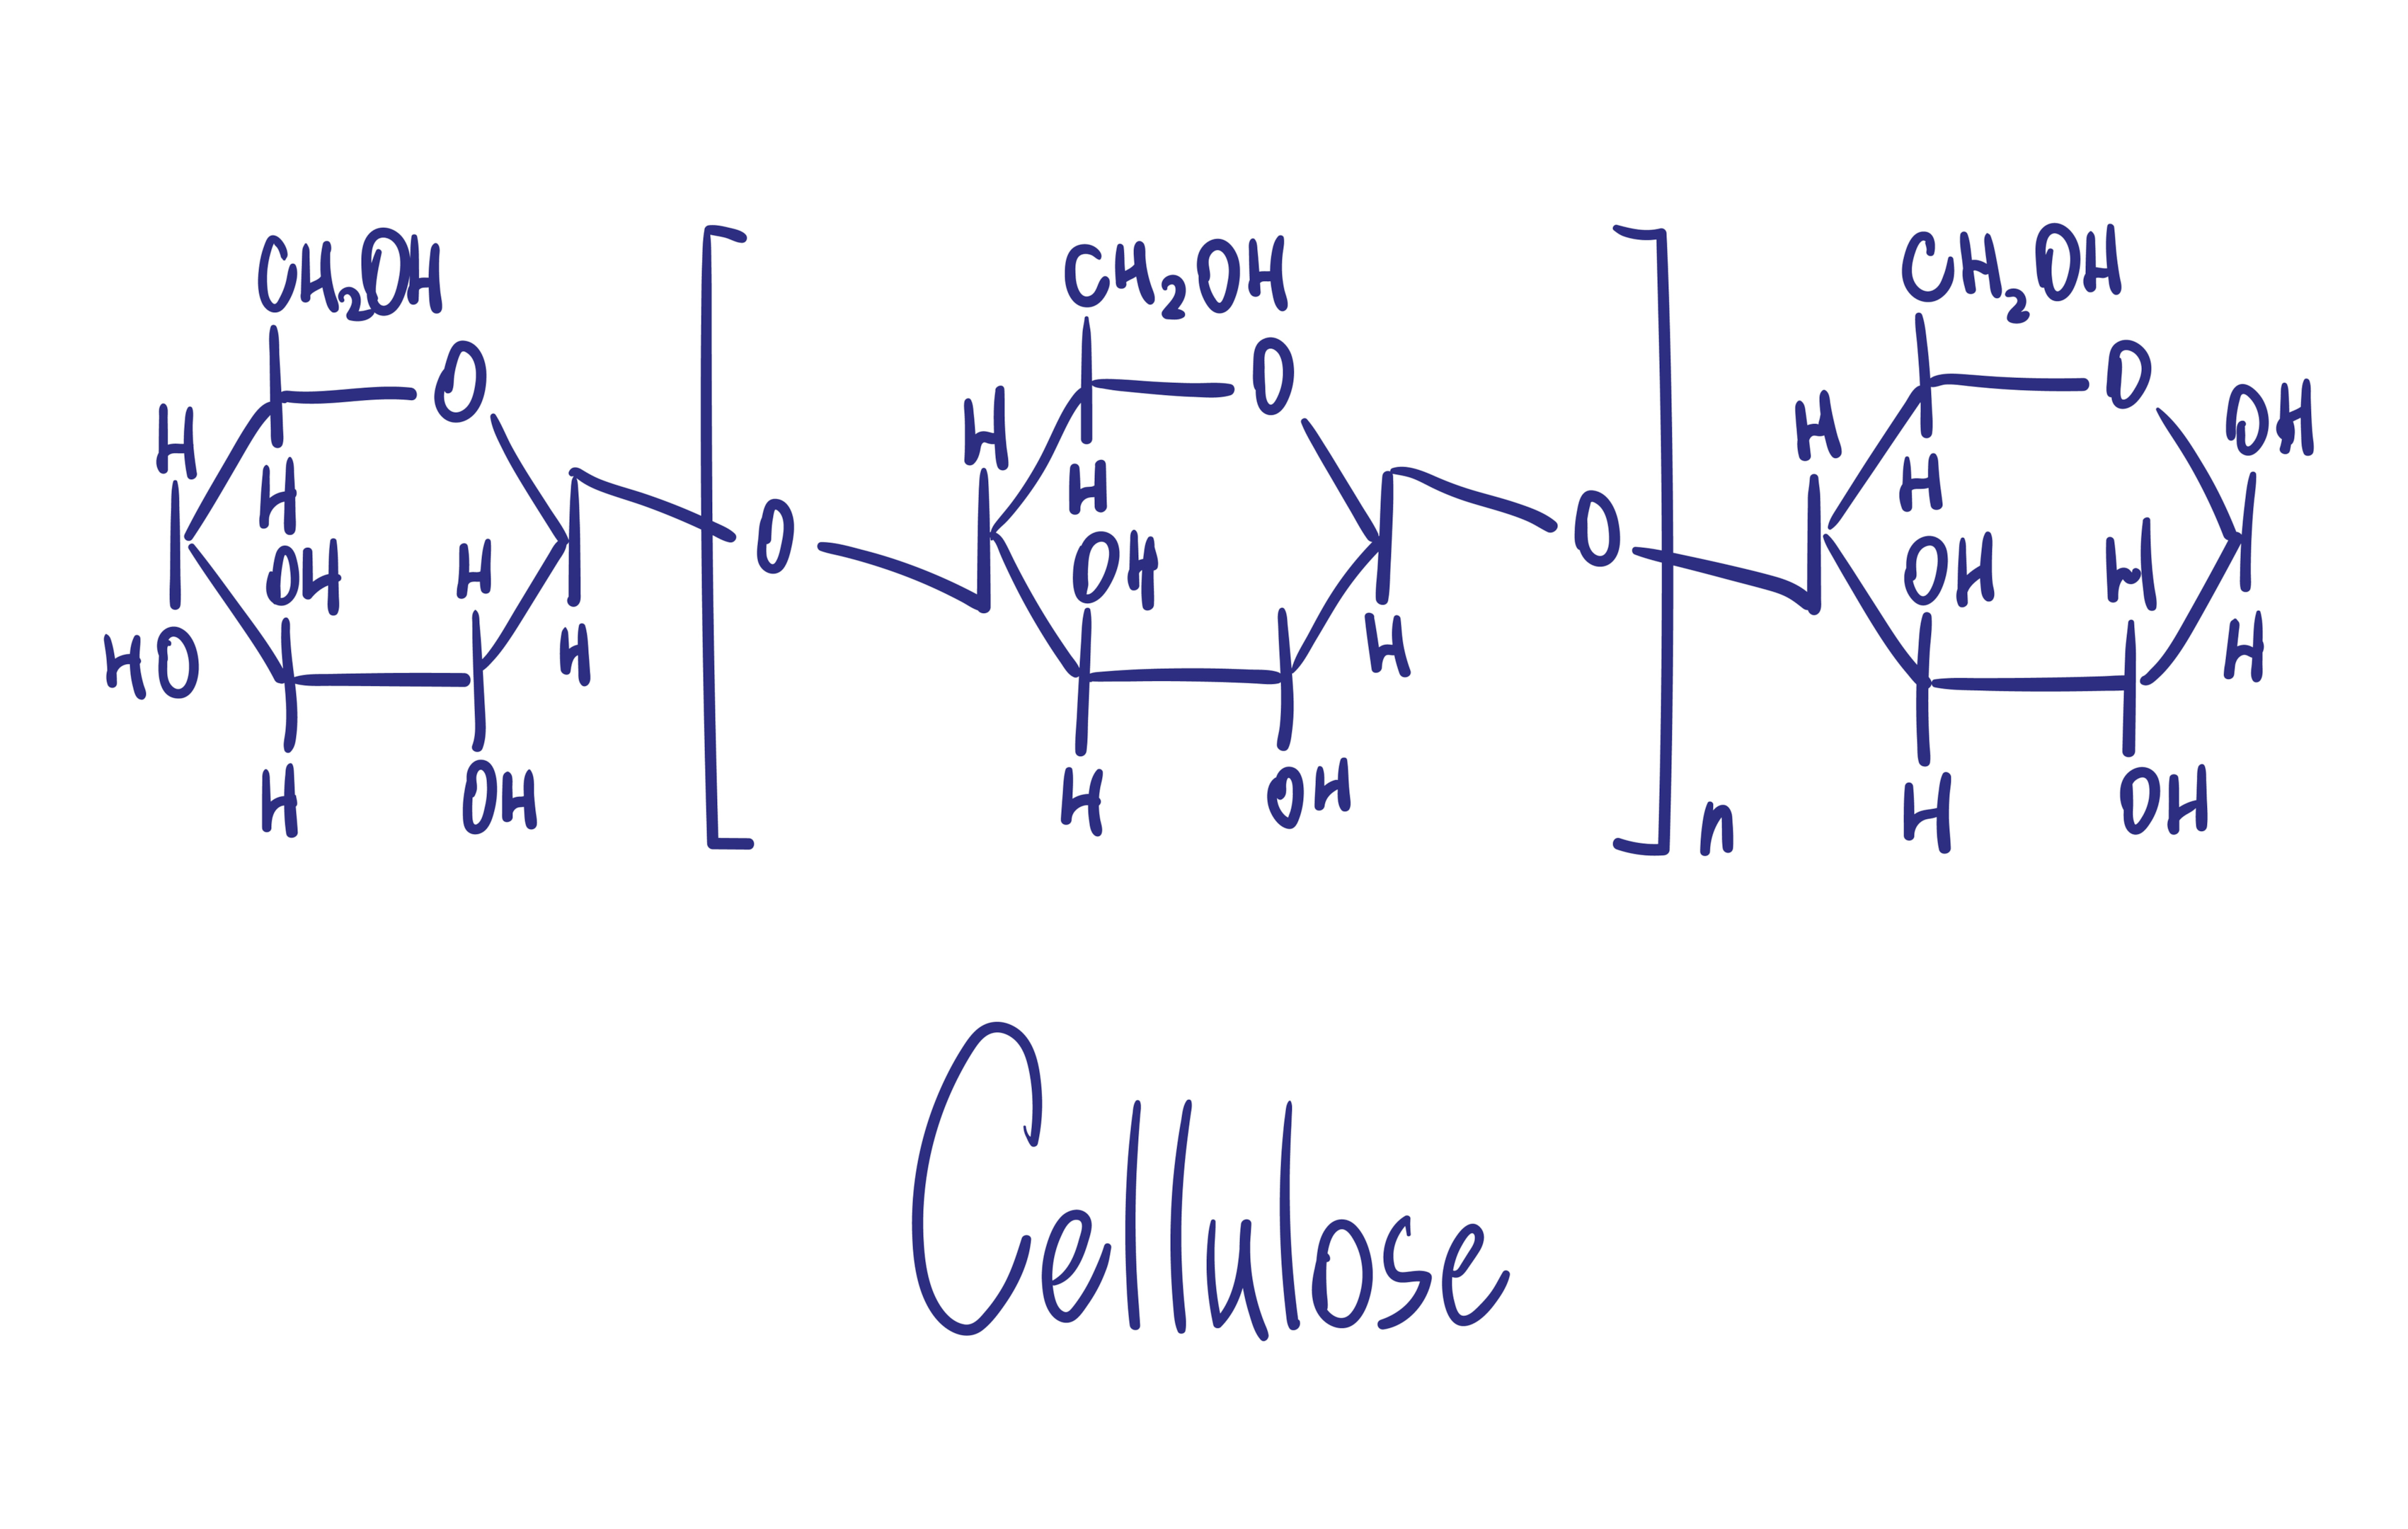 cellulose